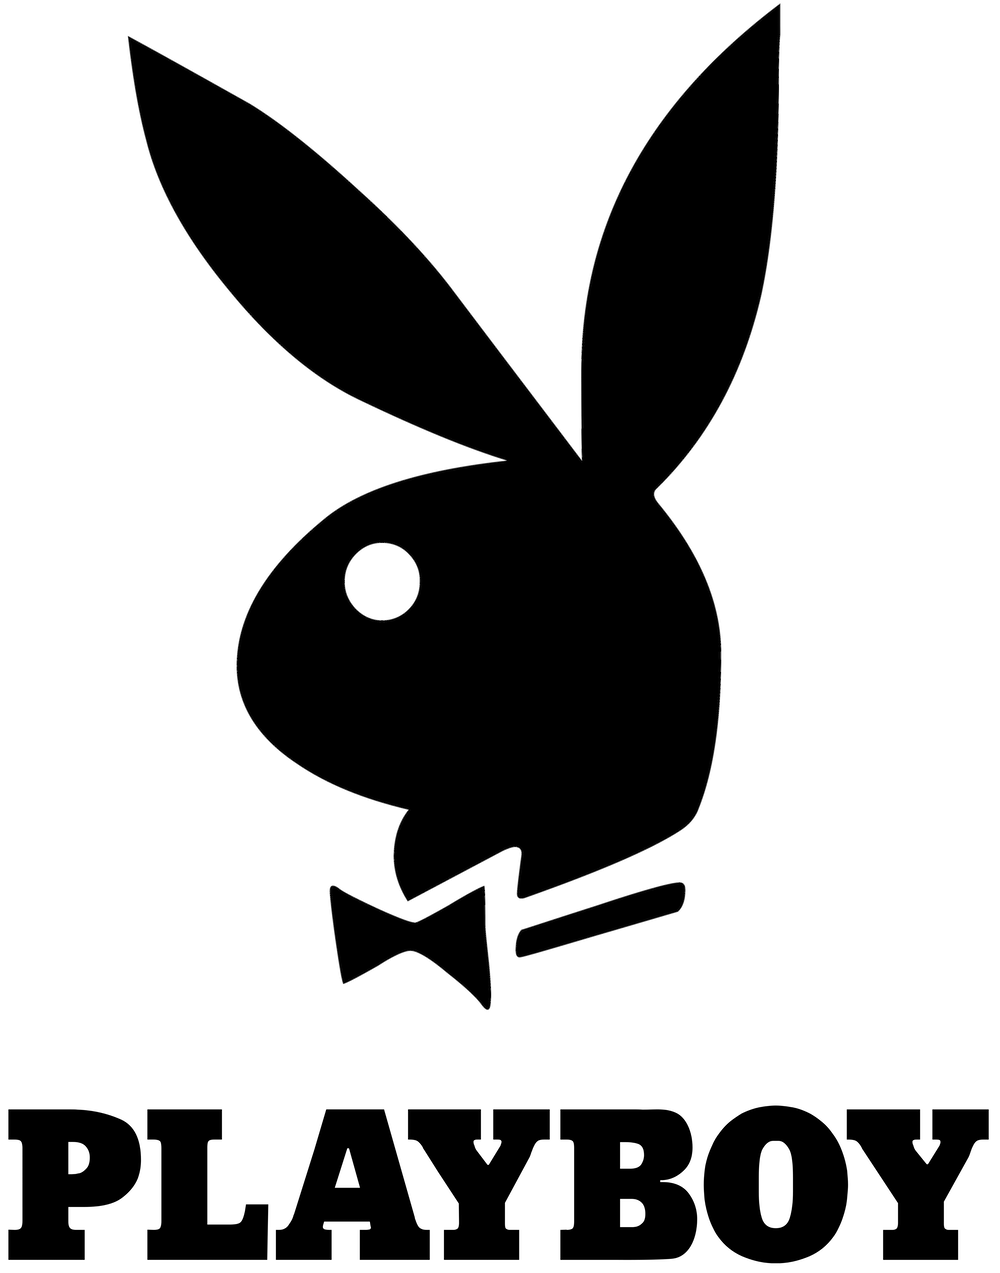 Playboy Slumber Bunny Romper by ROMA in Black or Pink in Size S/M, M/L, L/XL, 1XL/2XL, 3XL/4XL